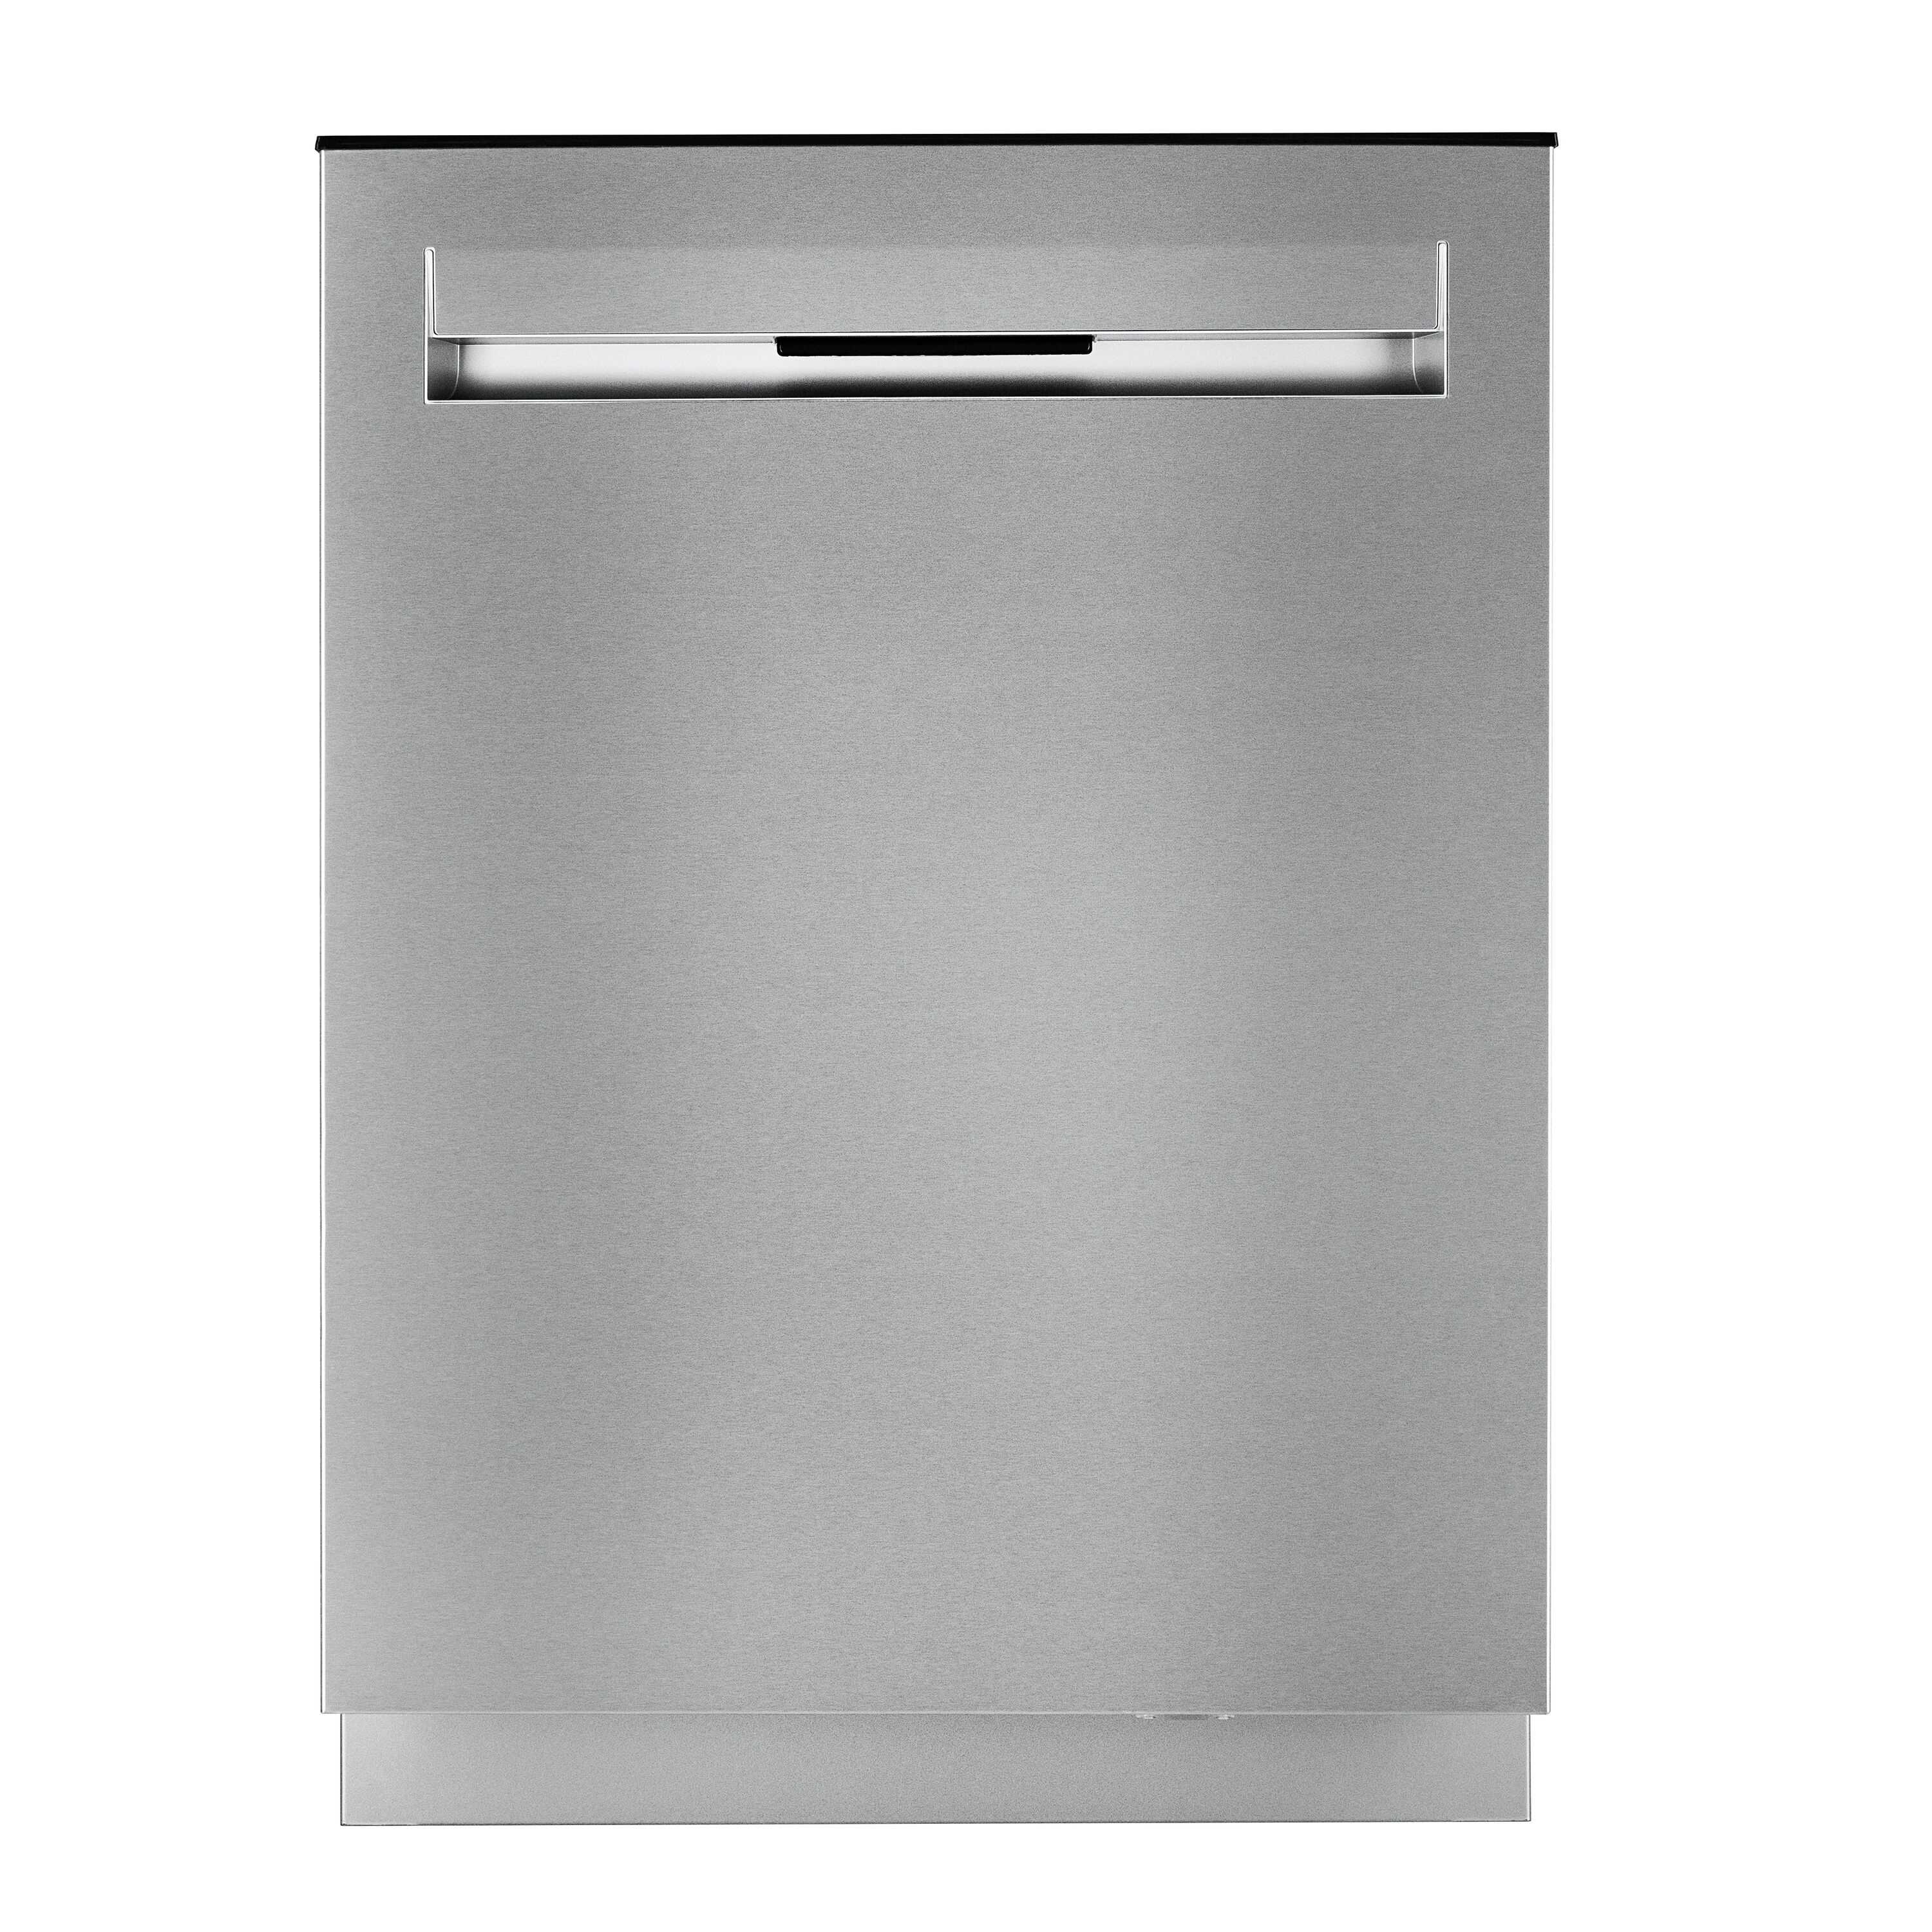 Hisense Bottom-Freezer Refrigerator with Ice Maker, Gas Freestanding Range  in Stainless Steel, Third Rack Dishwasher